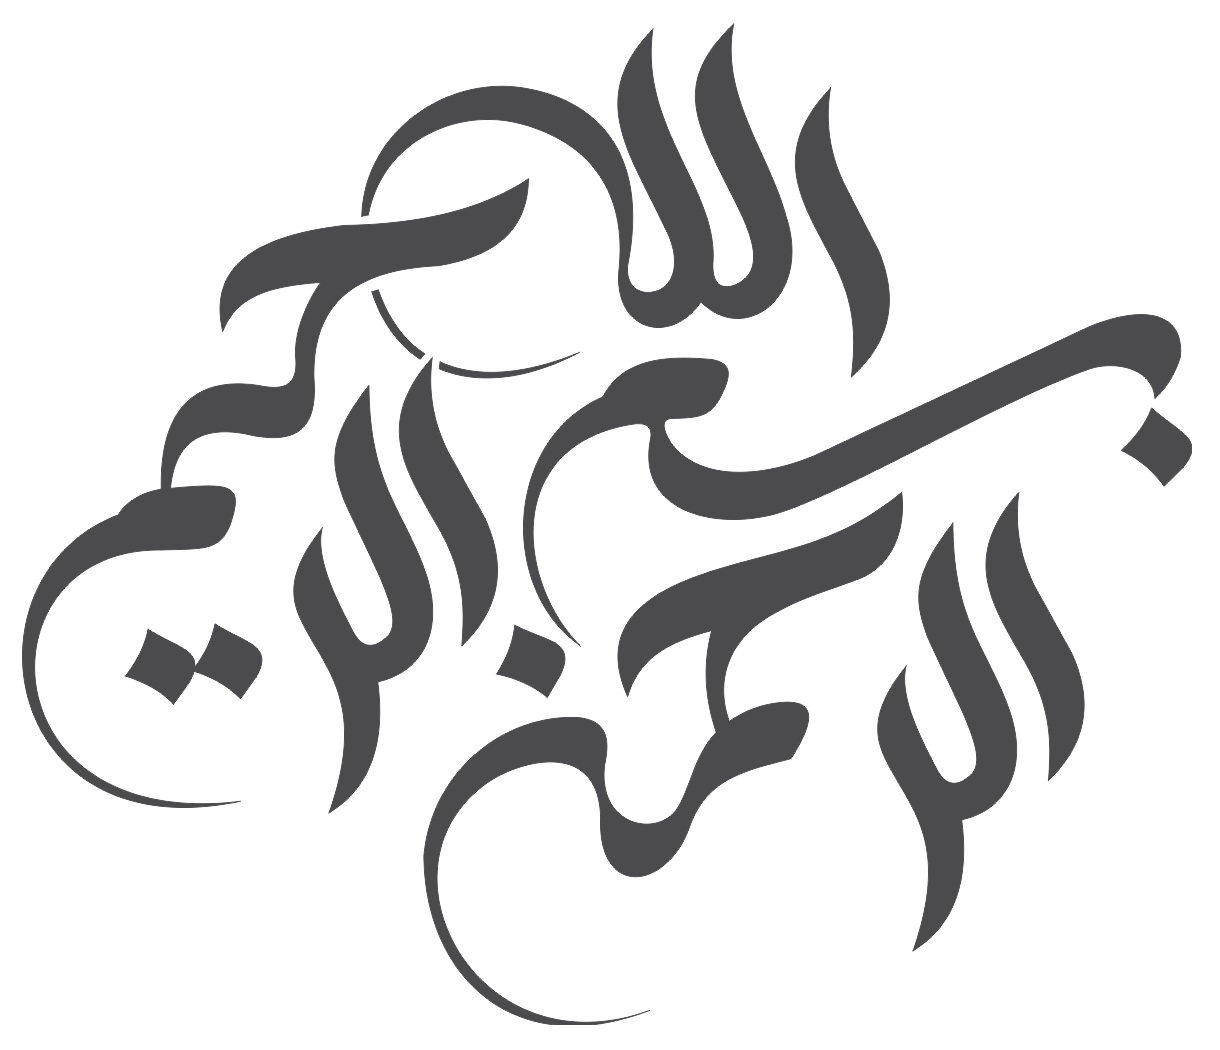 Bismillah 阿拉伯书法艺术